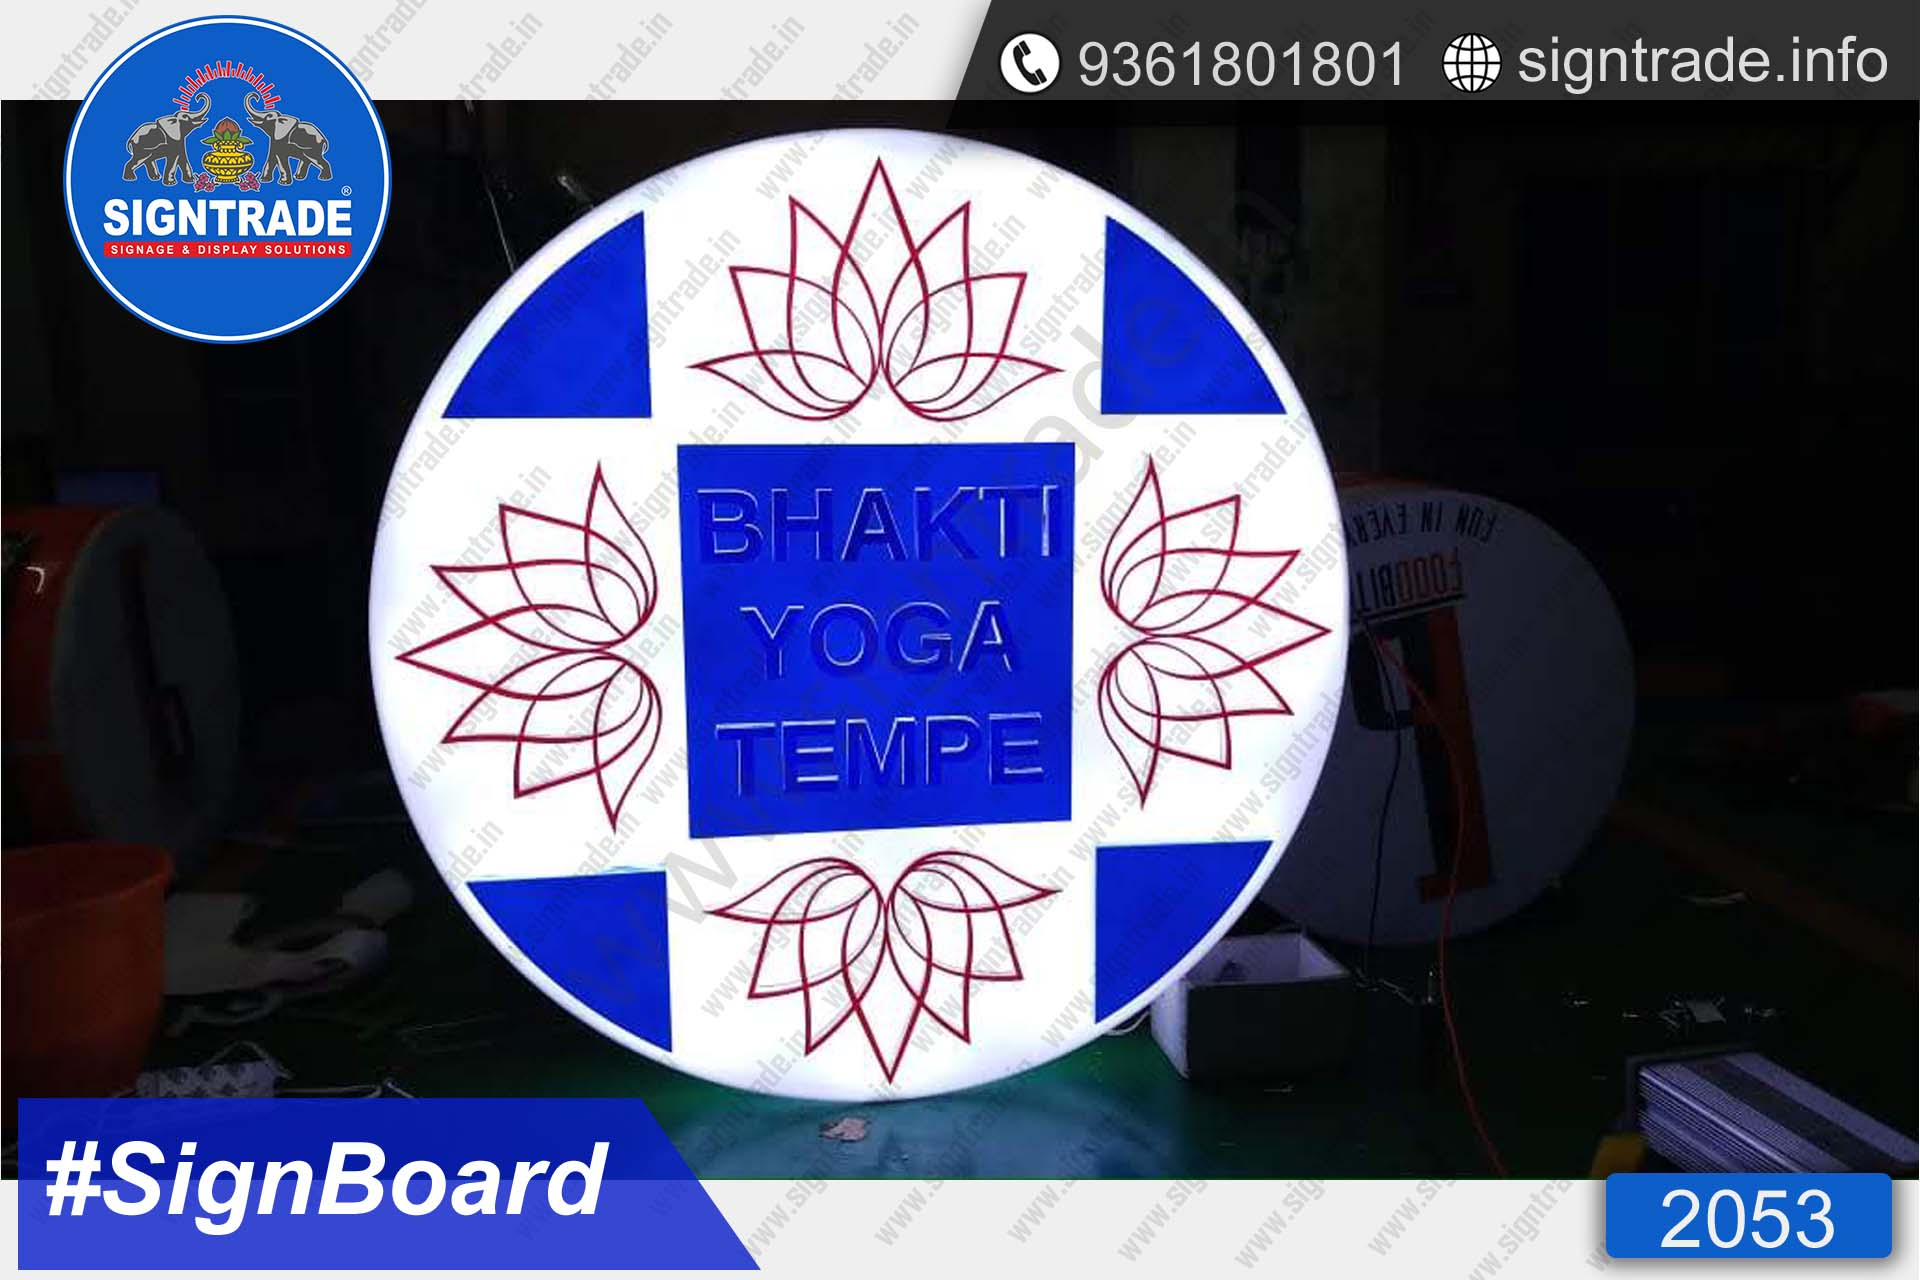 Bhakti Yoga Tempe Signboard